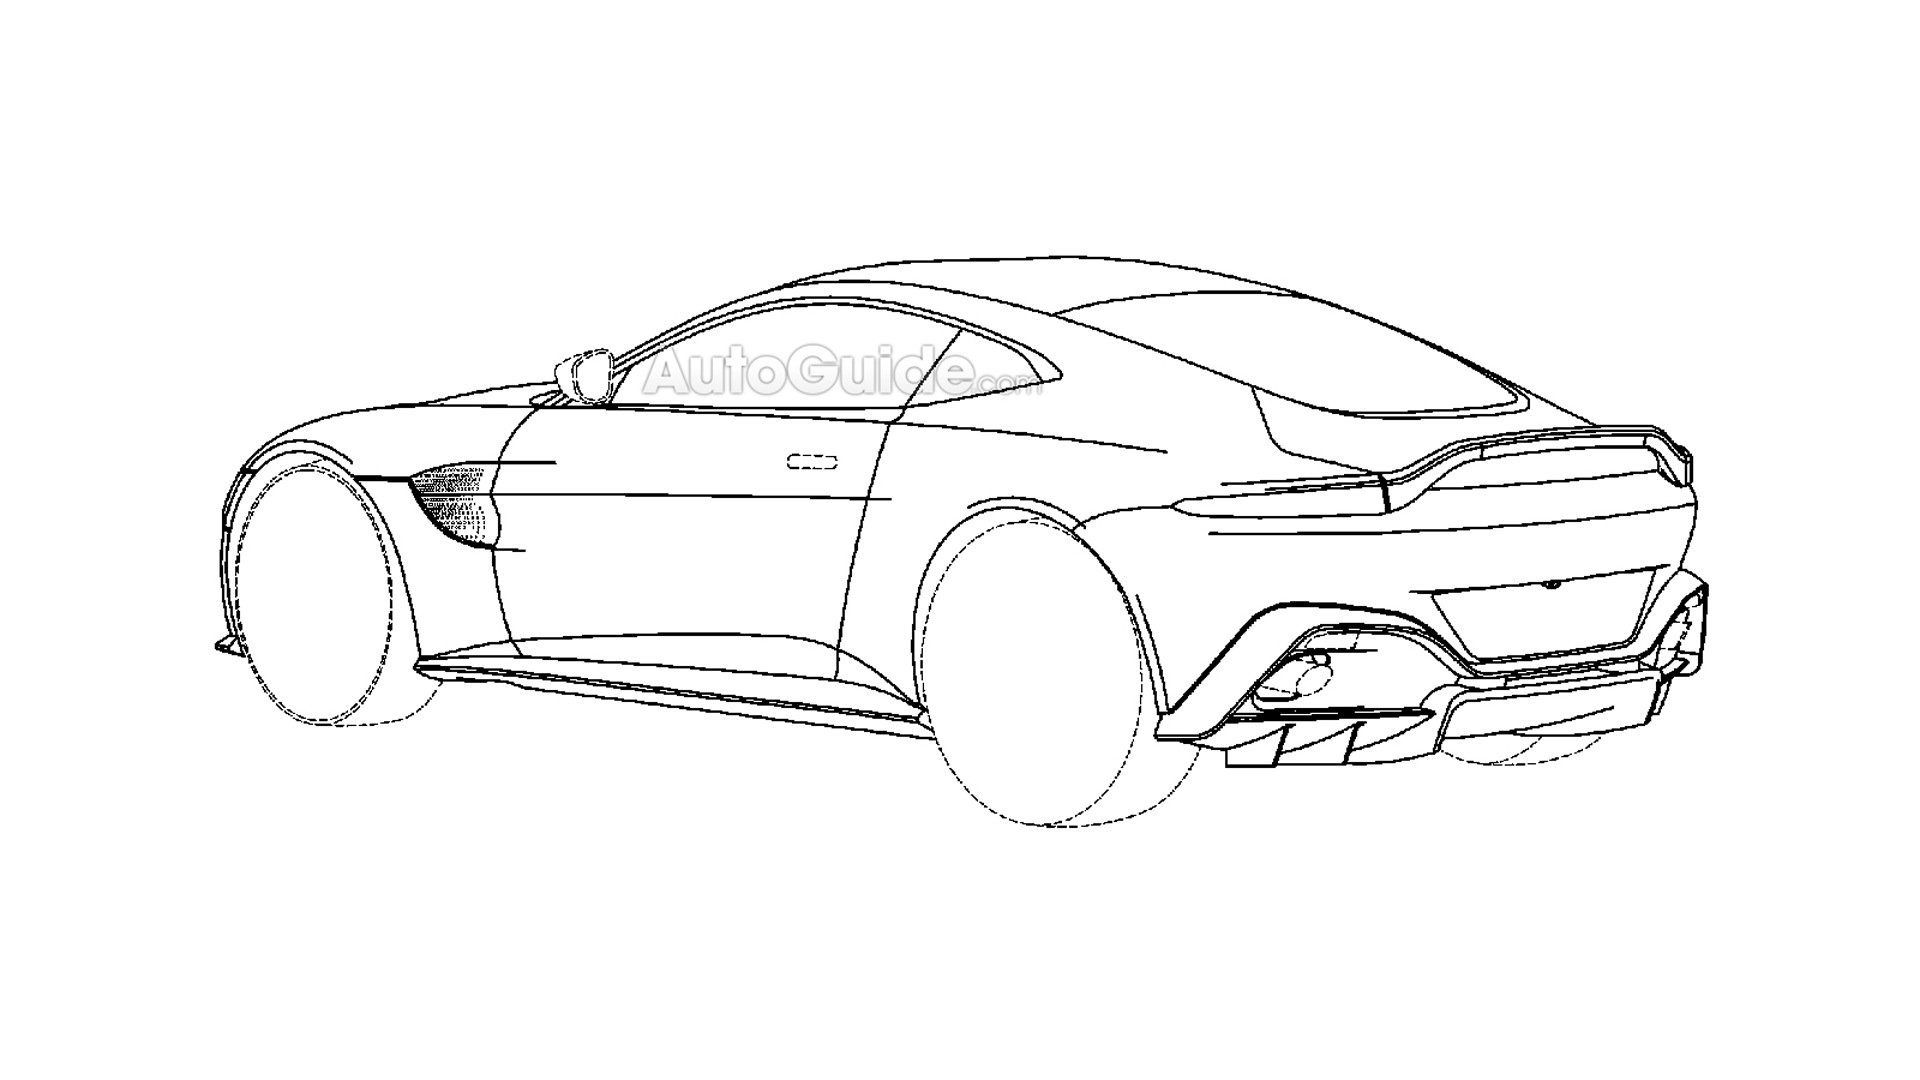 2018 Aston Martin Vantage patent drawing - Image via Autoguide